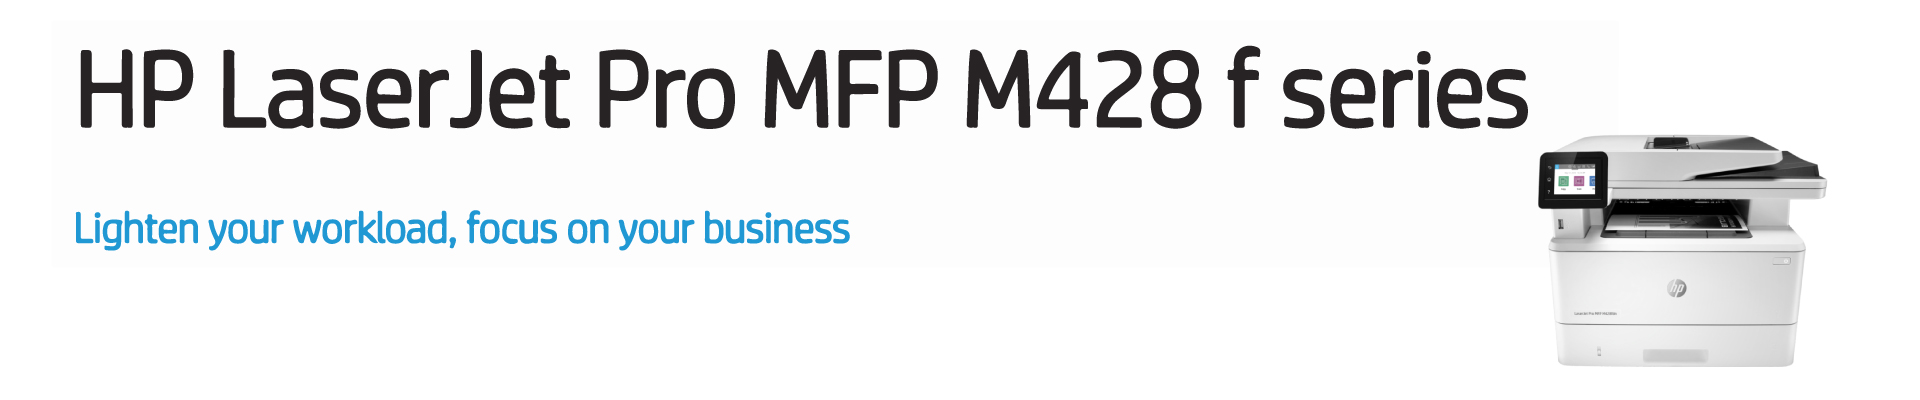 product HP LaserJet Pro MFP M428 Multifunction black and white